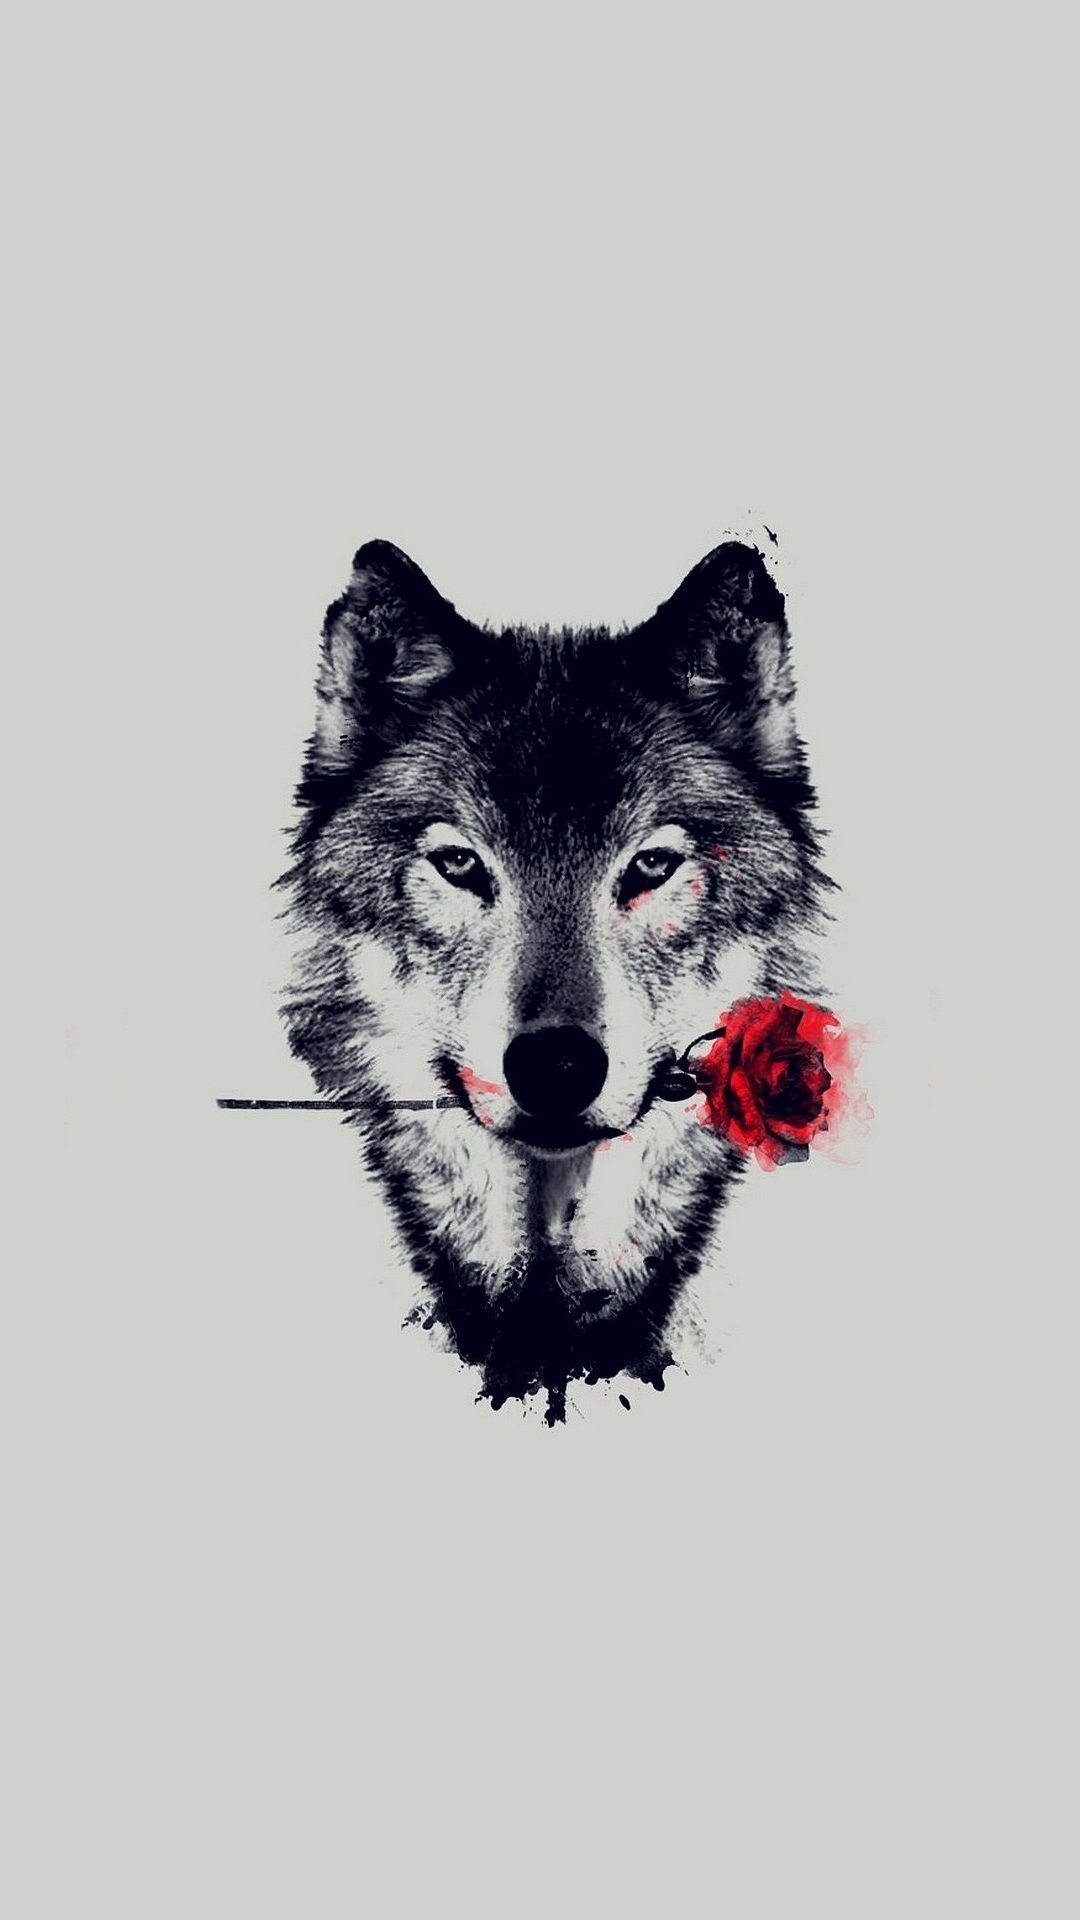 1080x1920 Wolf Red Rose Art Wallpaper iPhone 2018 iPhone Wallpapers | Art ... | Iphone wallpaper wolf, Rose art, Iphone art